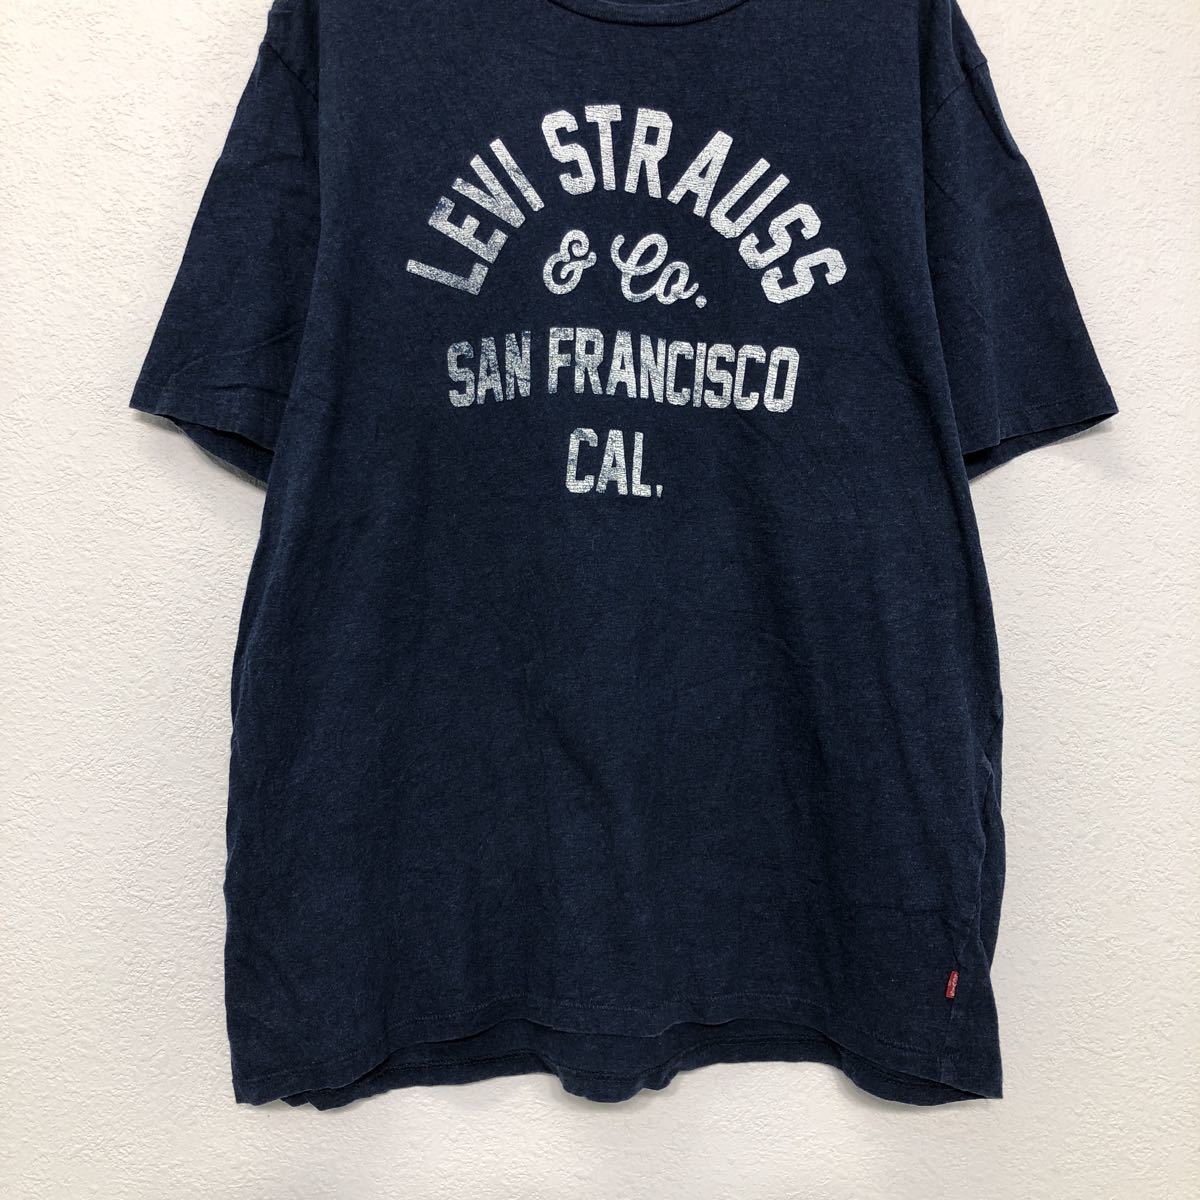 LEVI'S 半袖 プリントTシャツ XL ブルー ホワイト リーバイス LEVI STR AUSS &Co. 古着卸 アメリカ仕入 a508-5603_画像3